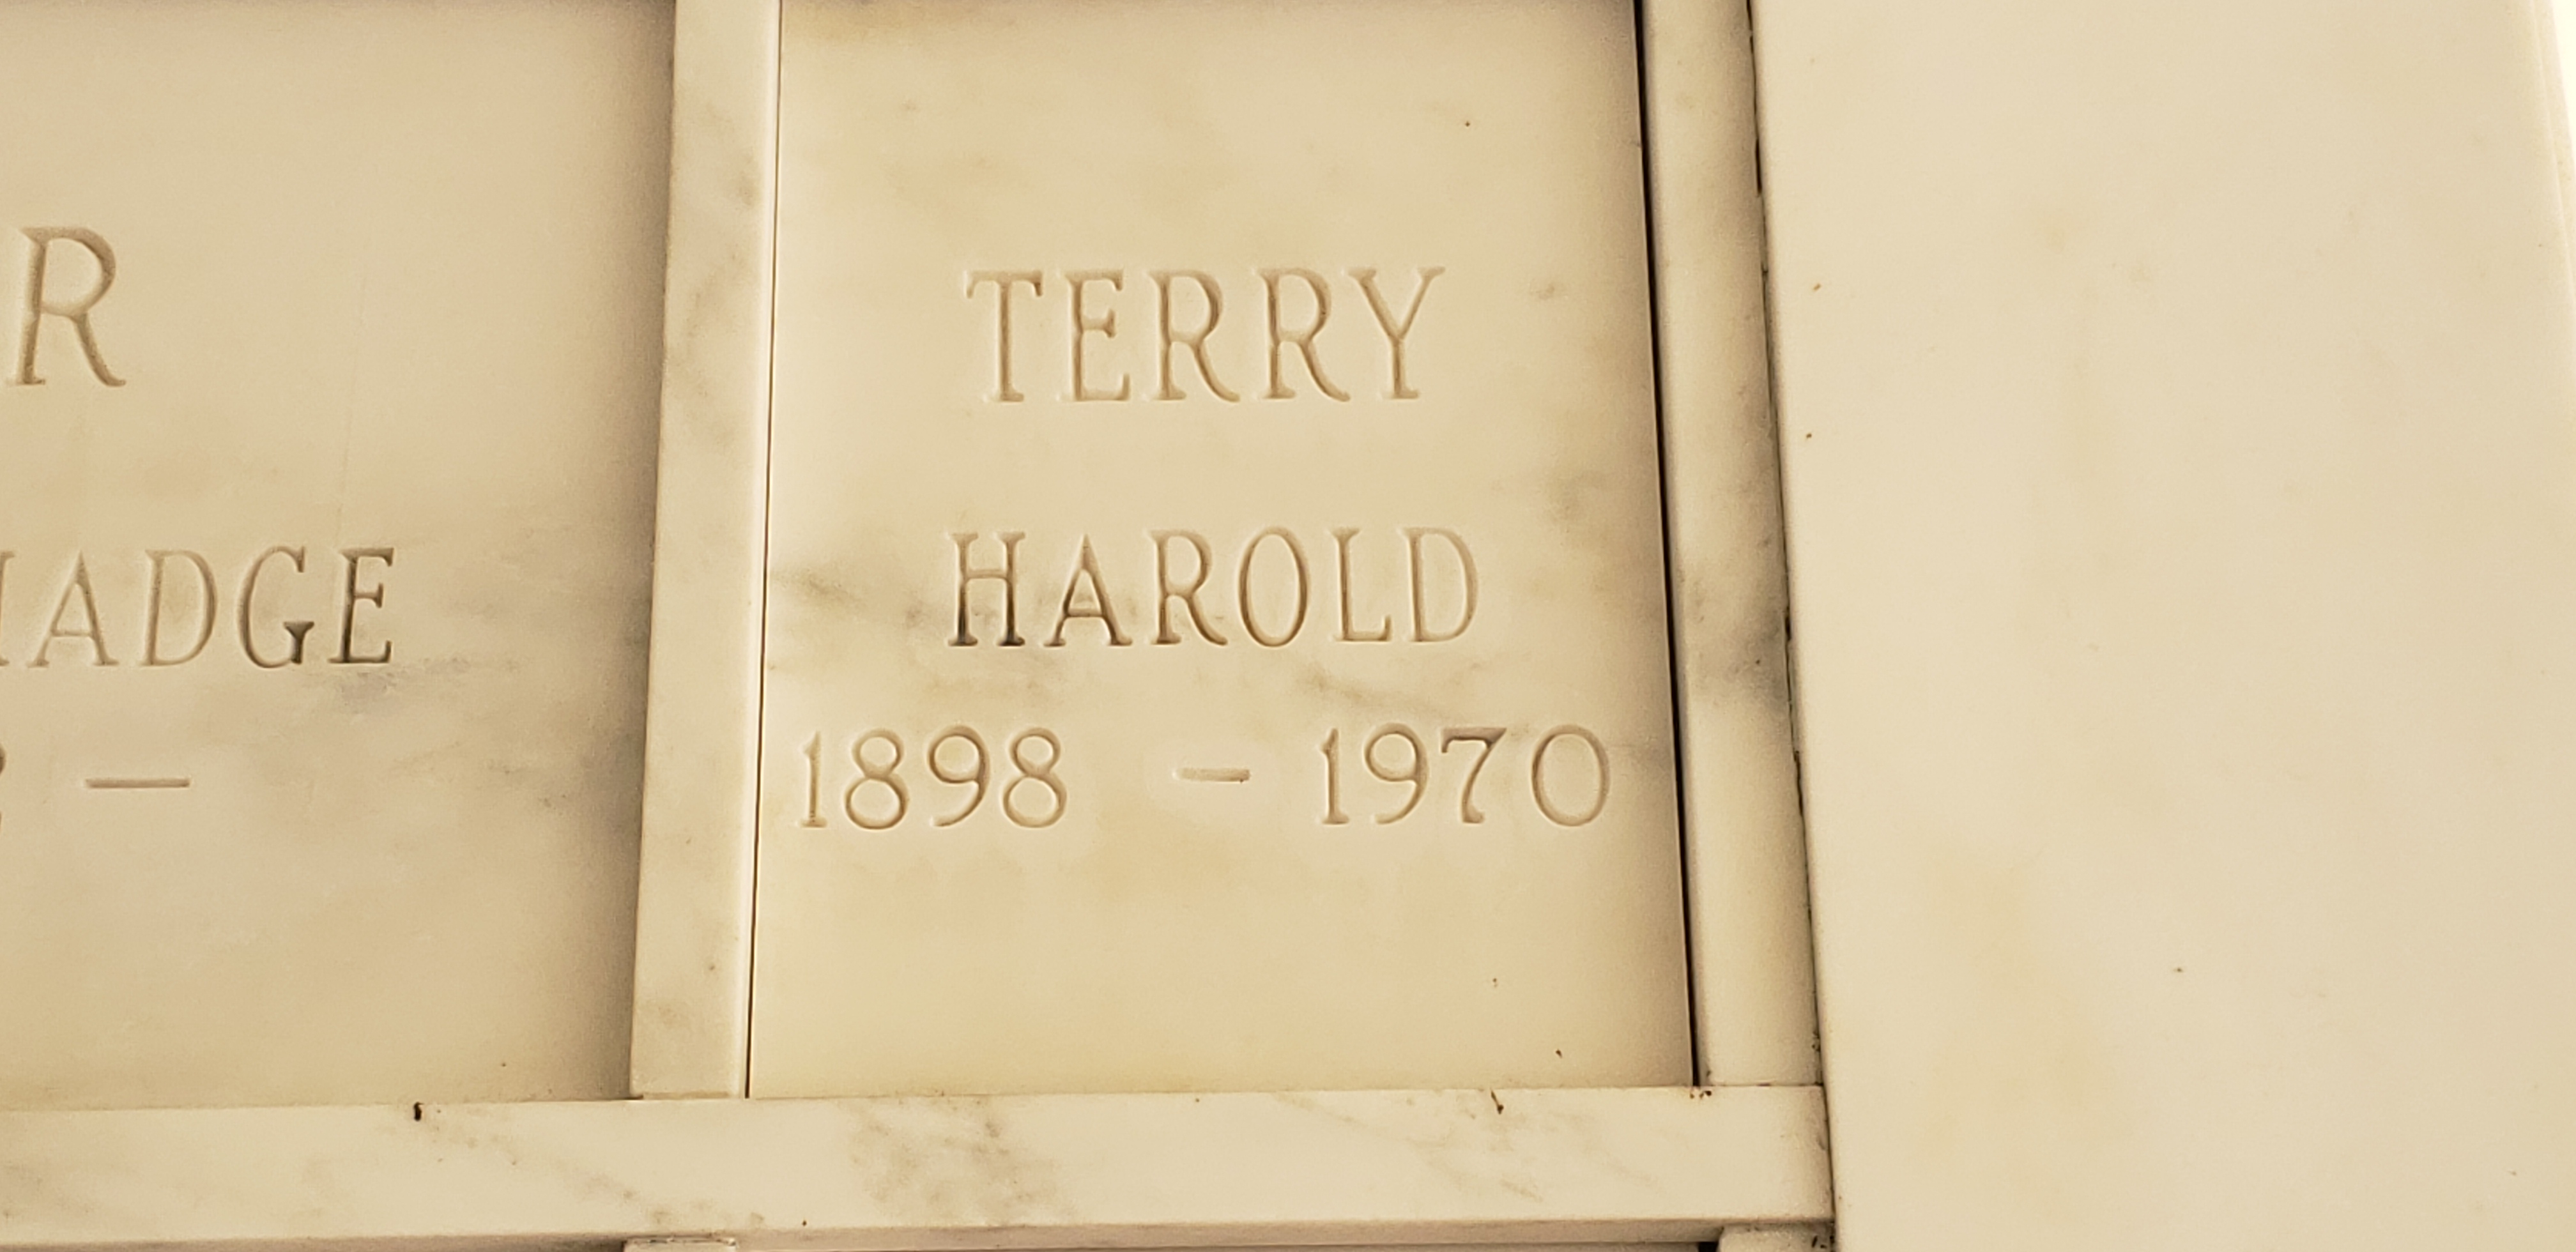 Harold Terry